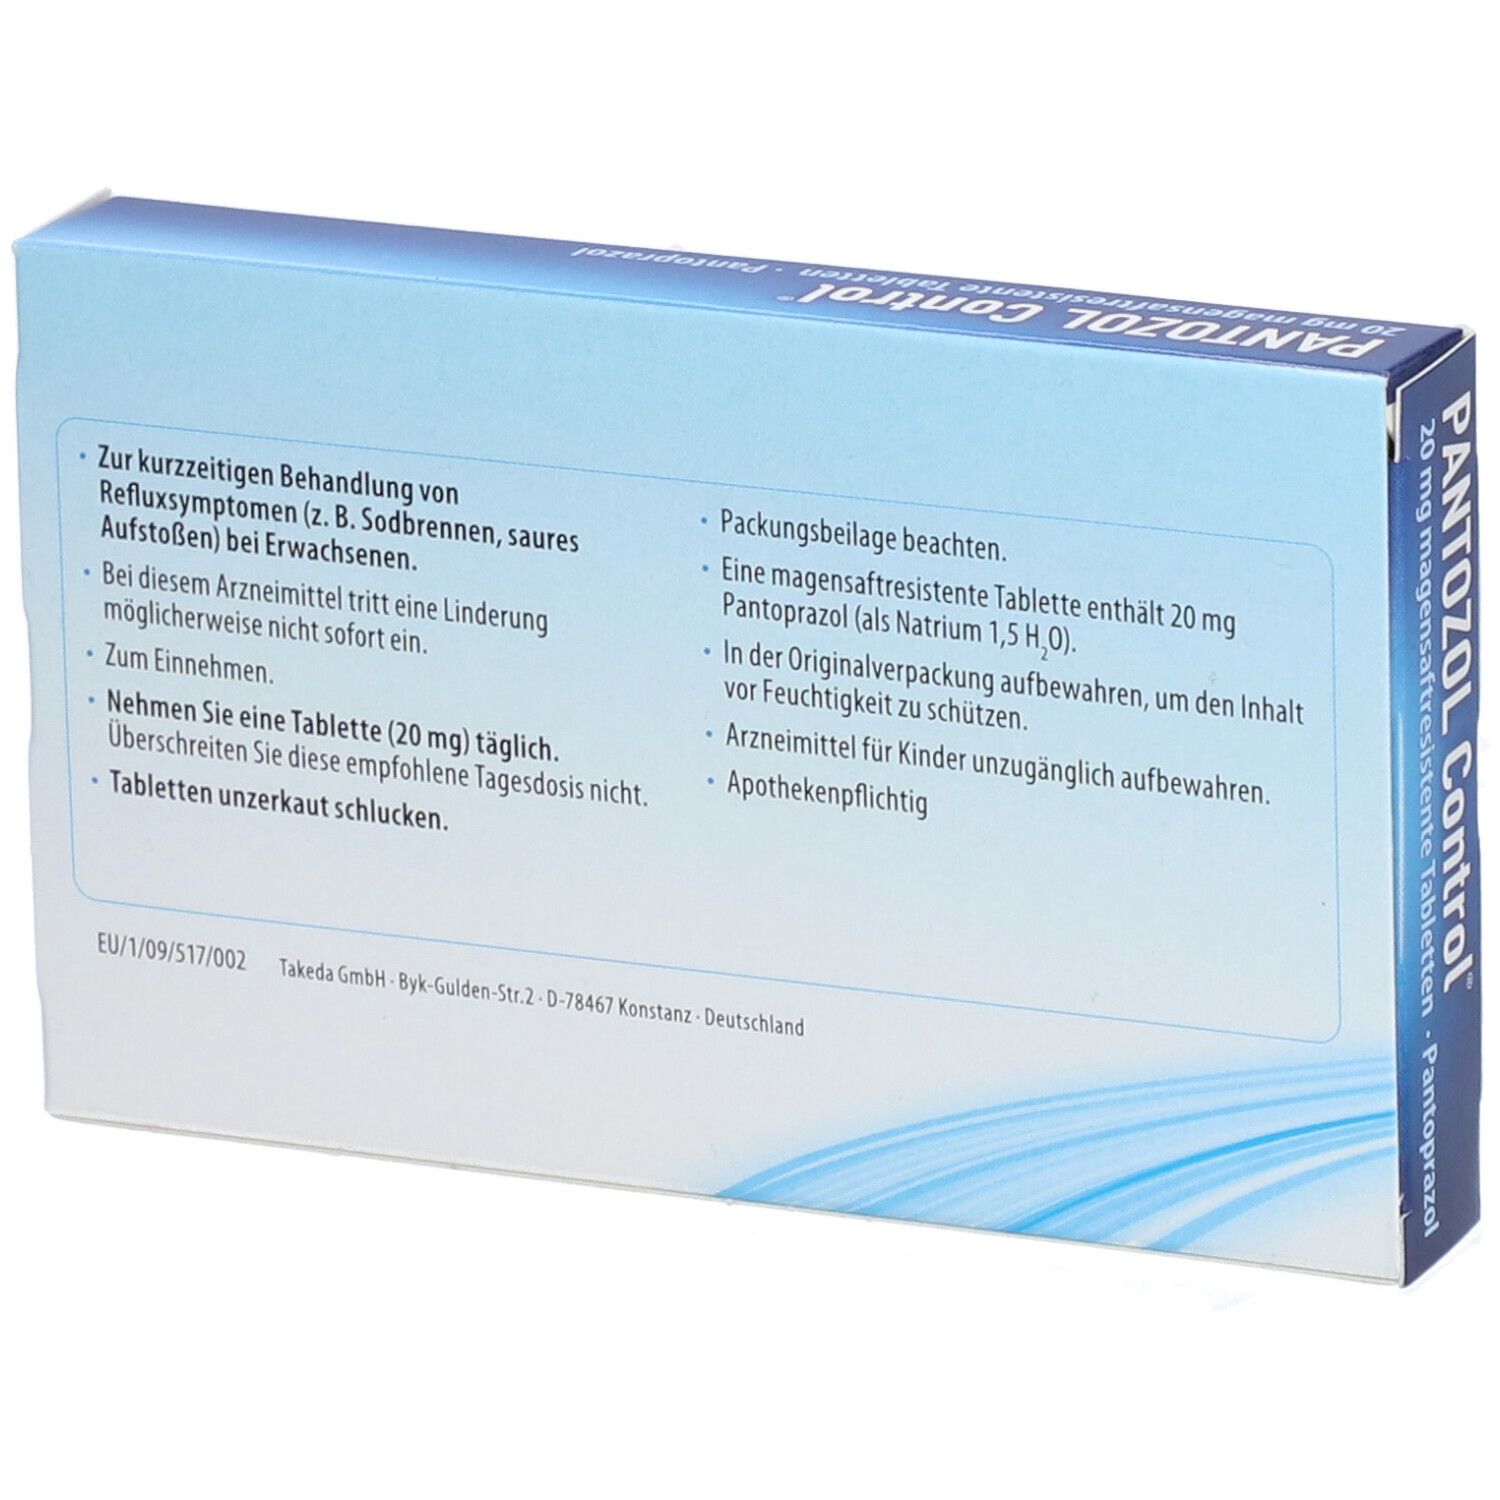 PANTOZOL Control® 20 mg